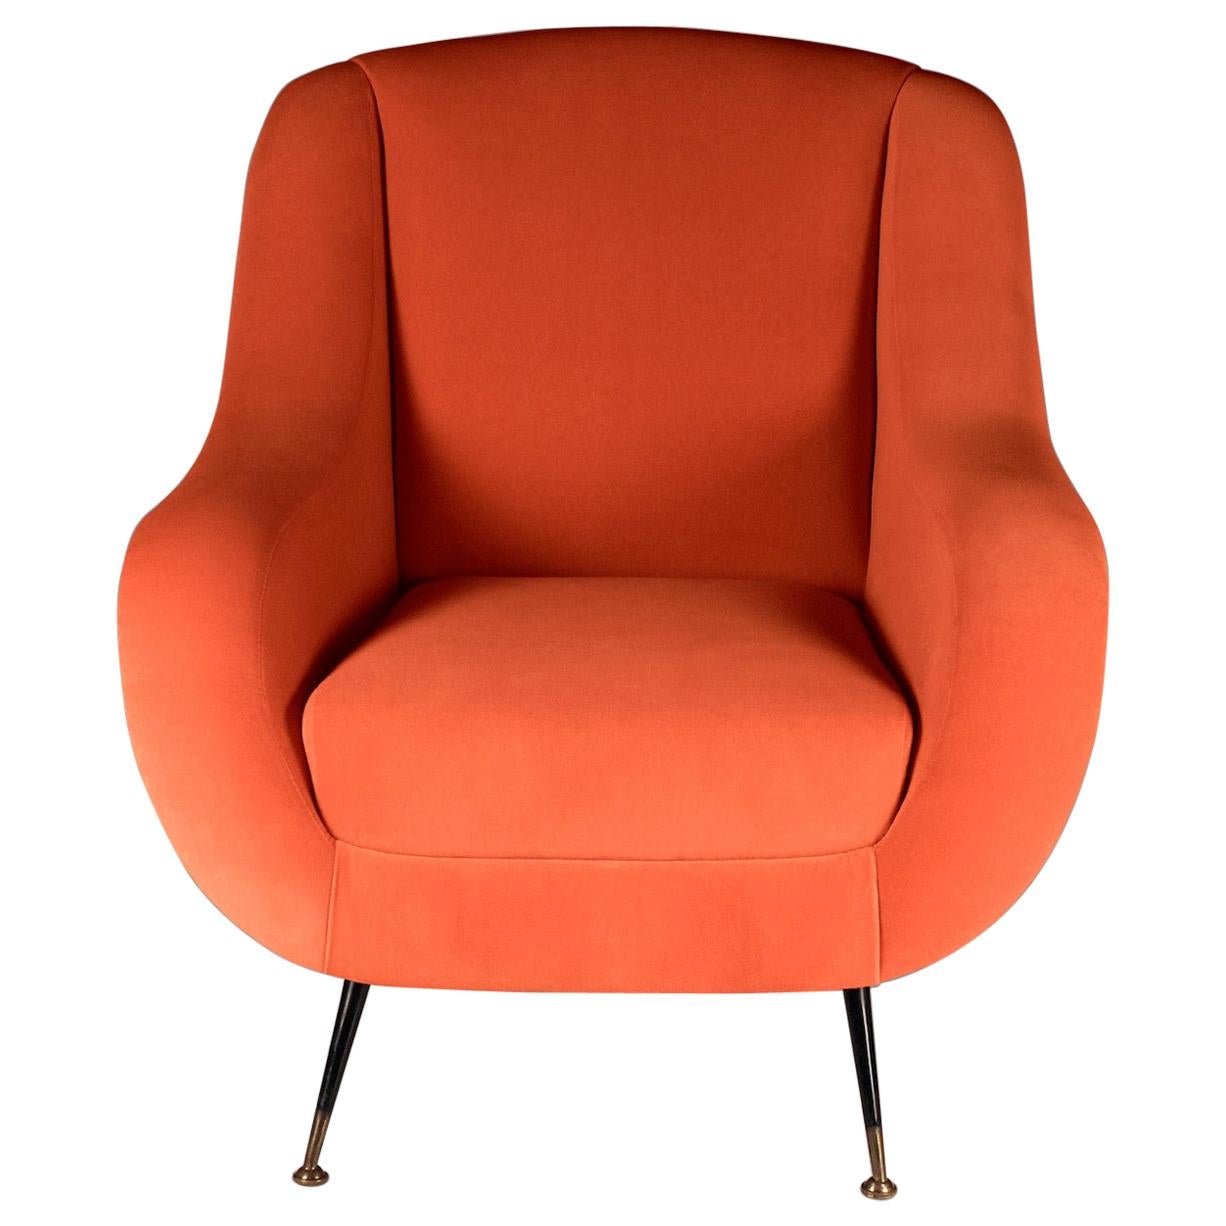 Midcentury 1950s Style Italian Lounge Chair Sophia in Orange